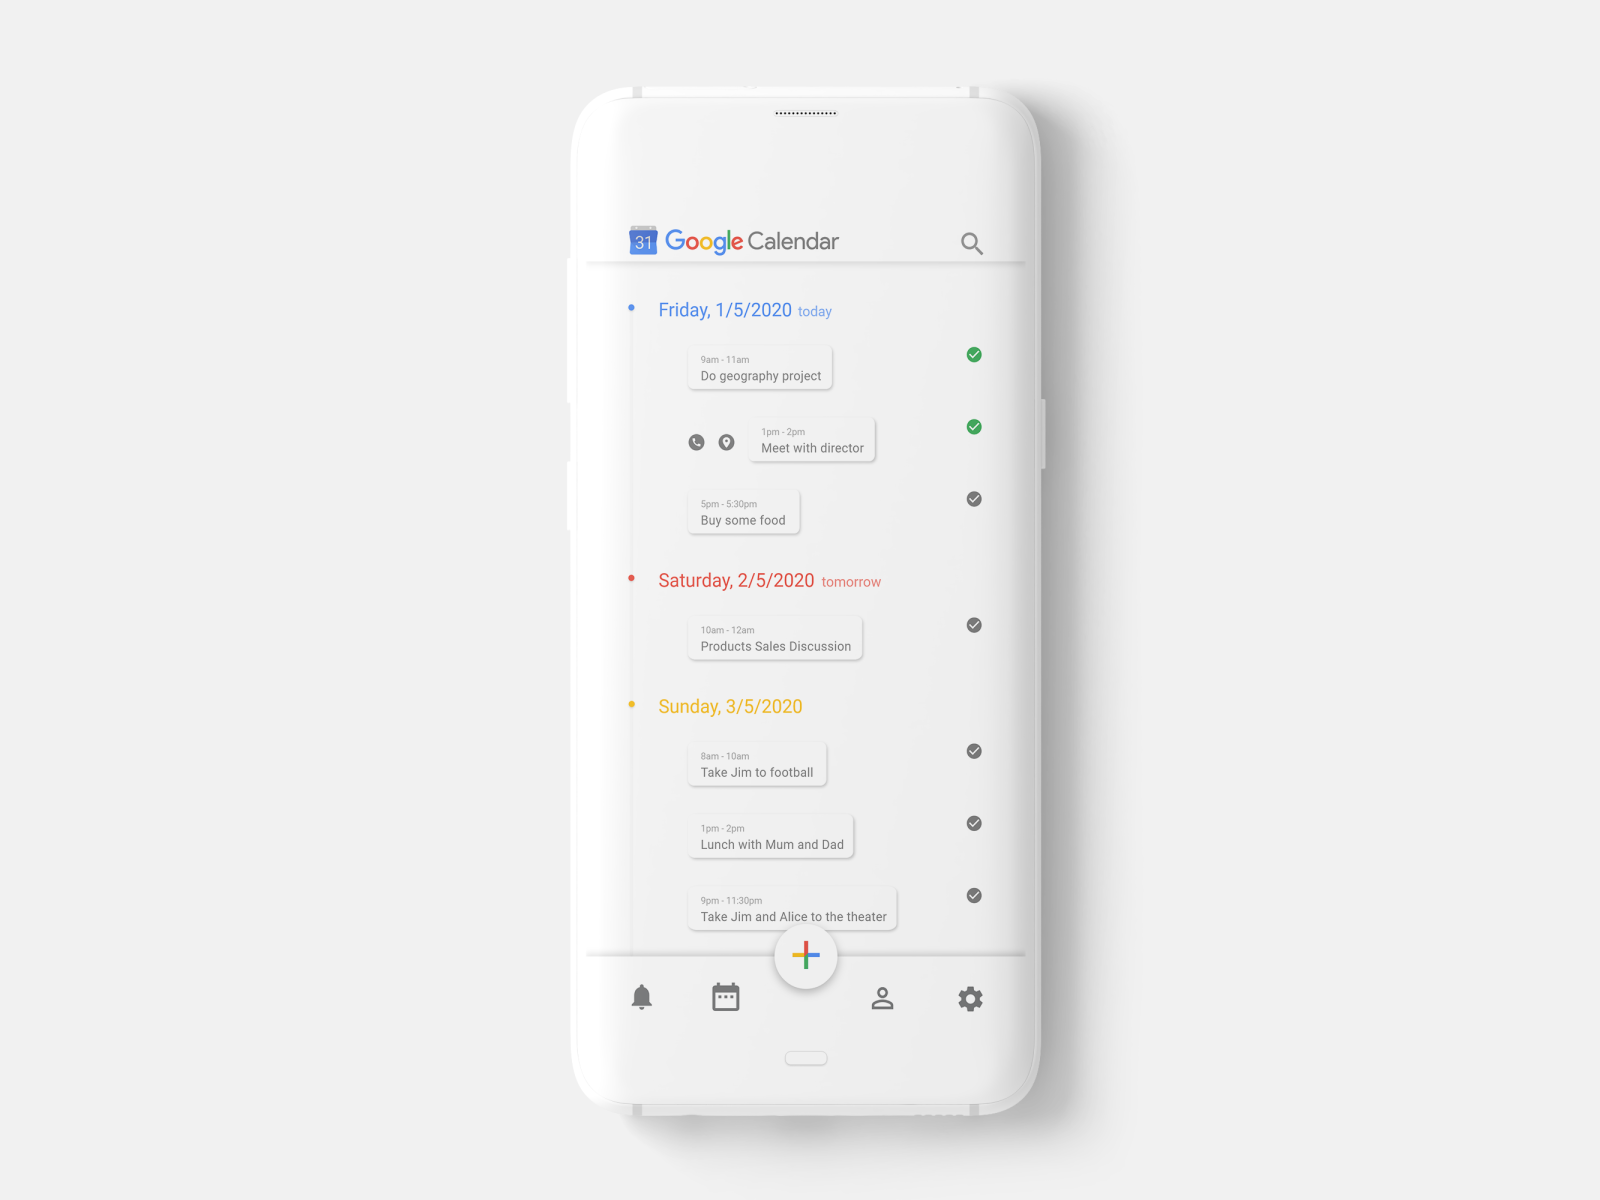 Google Calendar screen App UI design minimal style by André Morins on